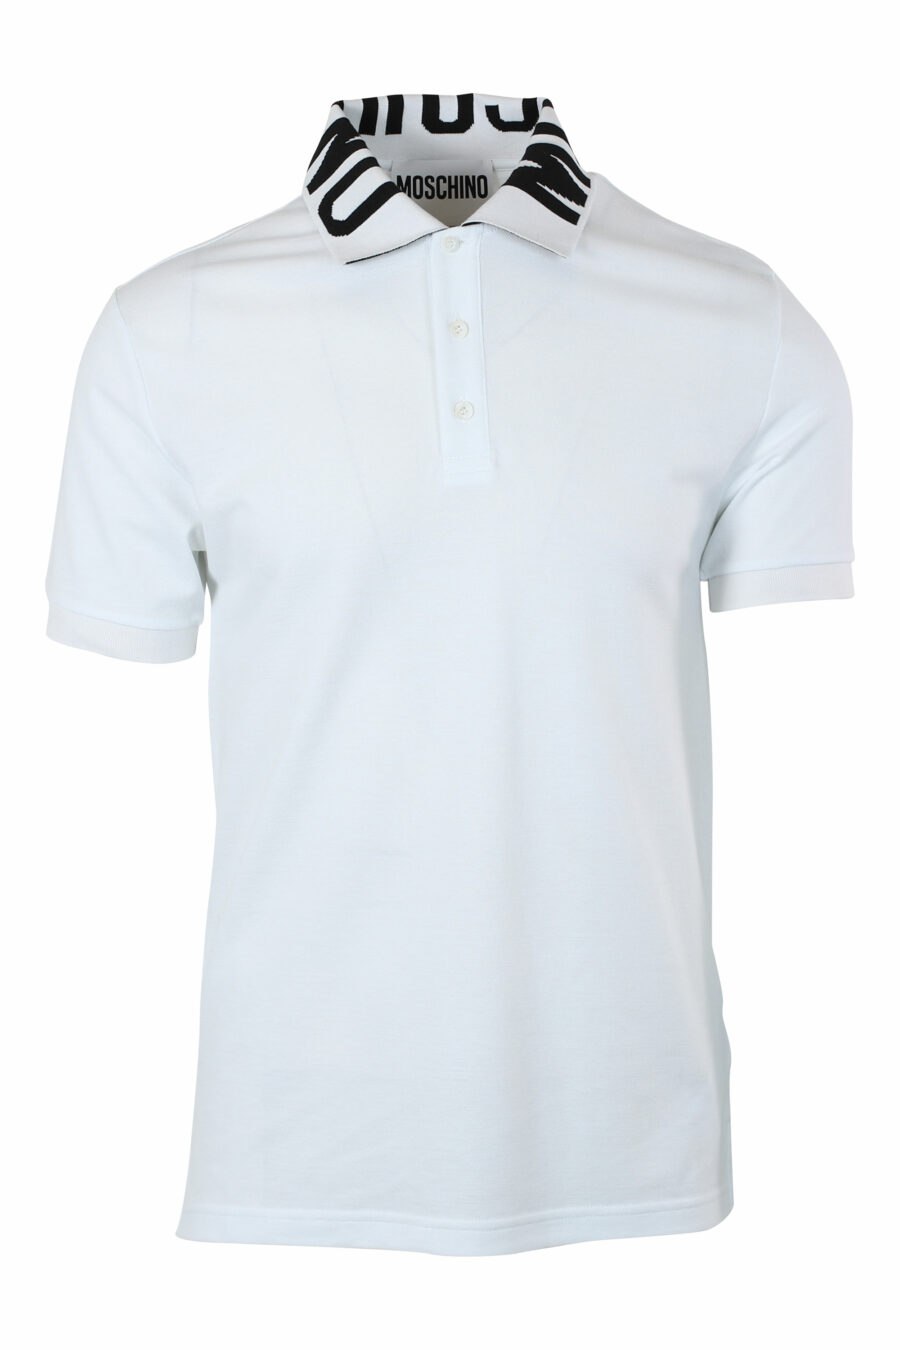 Weißes Poloshirt mit schwarzem Kragenlogo - IMG 9619